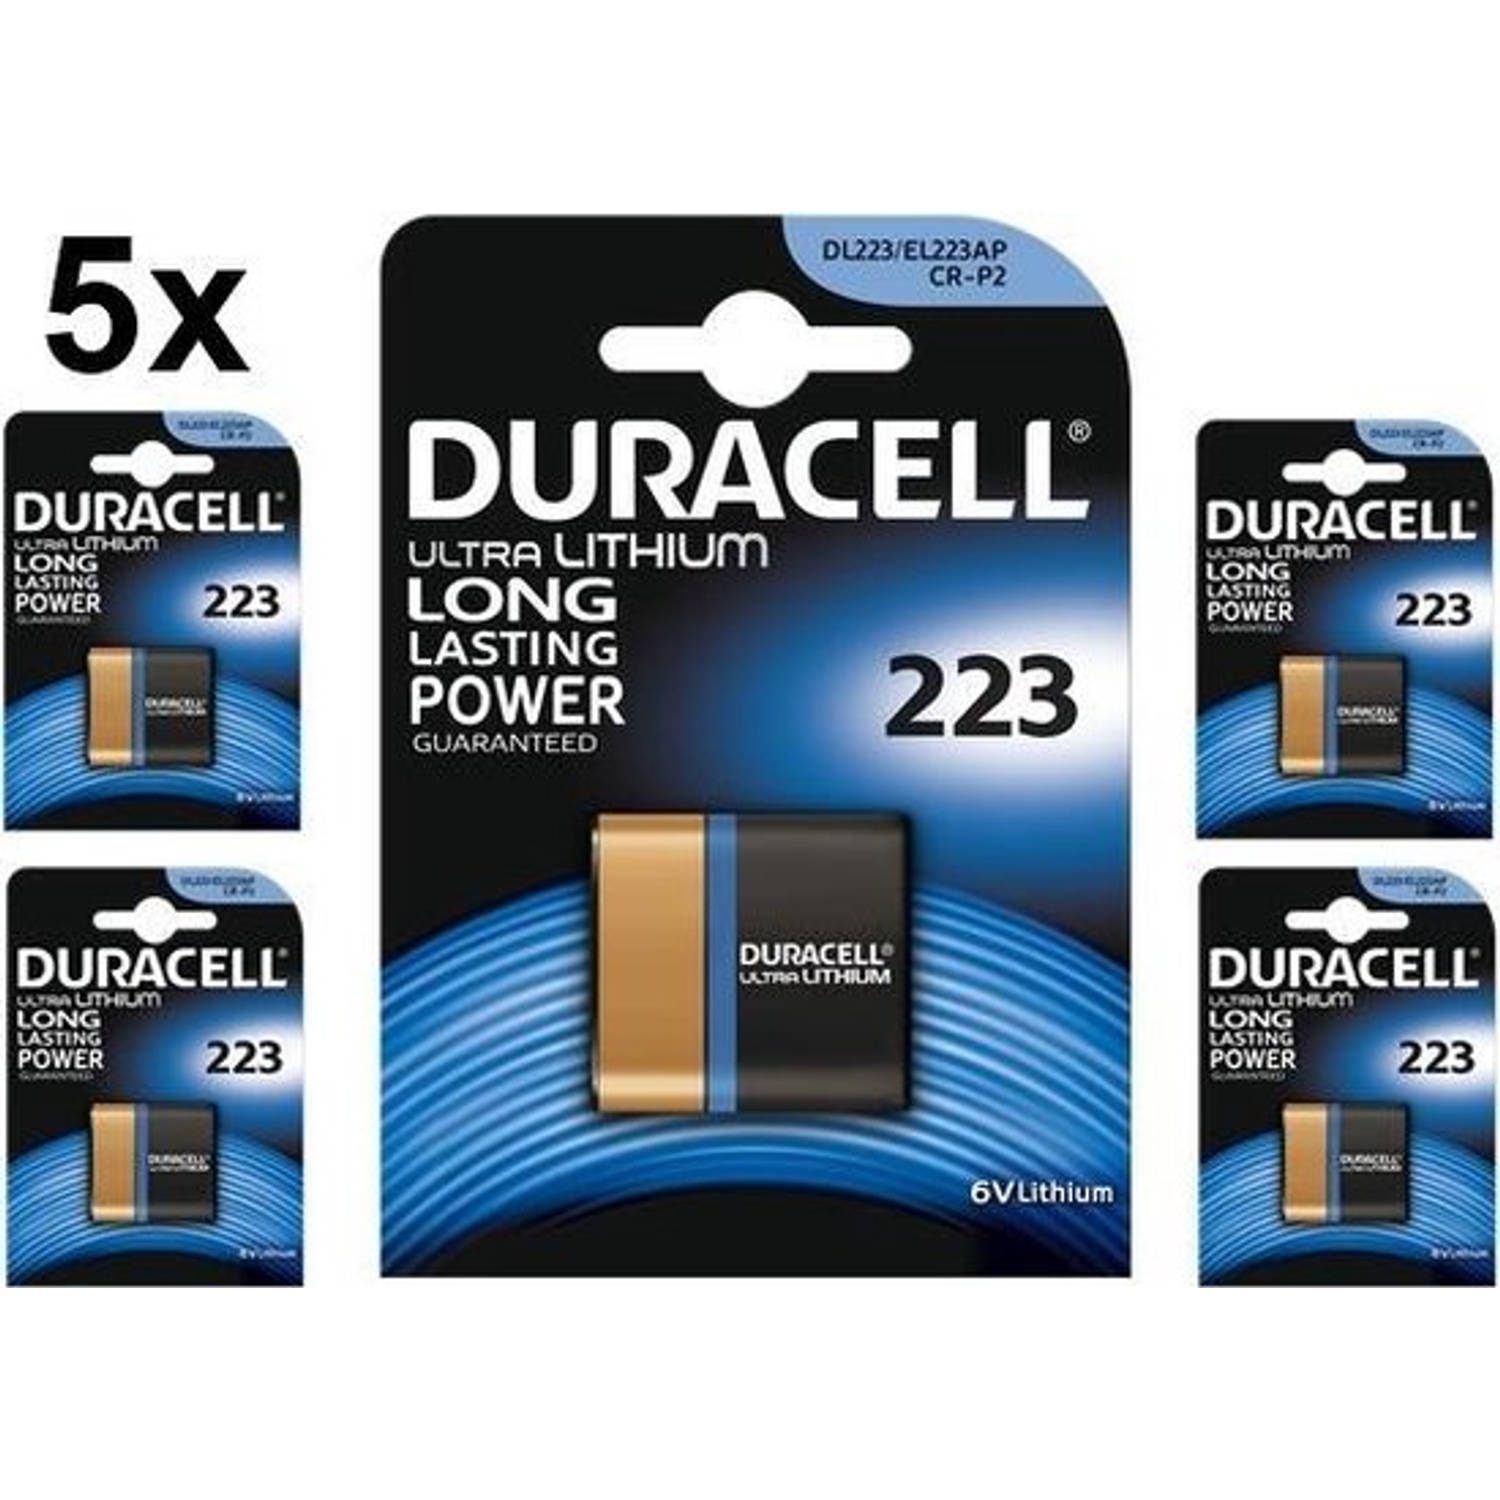 5 Stuks Duracell Crp2-223-Dl223-El223ap-Cr-p2 6v Lithium Batterij